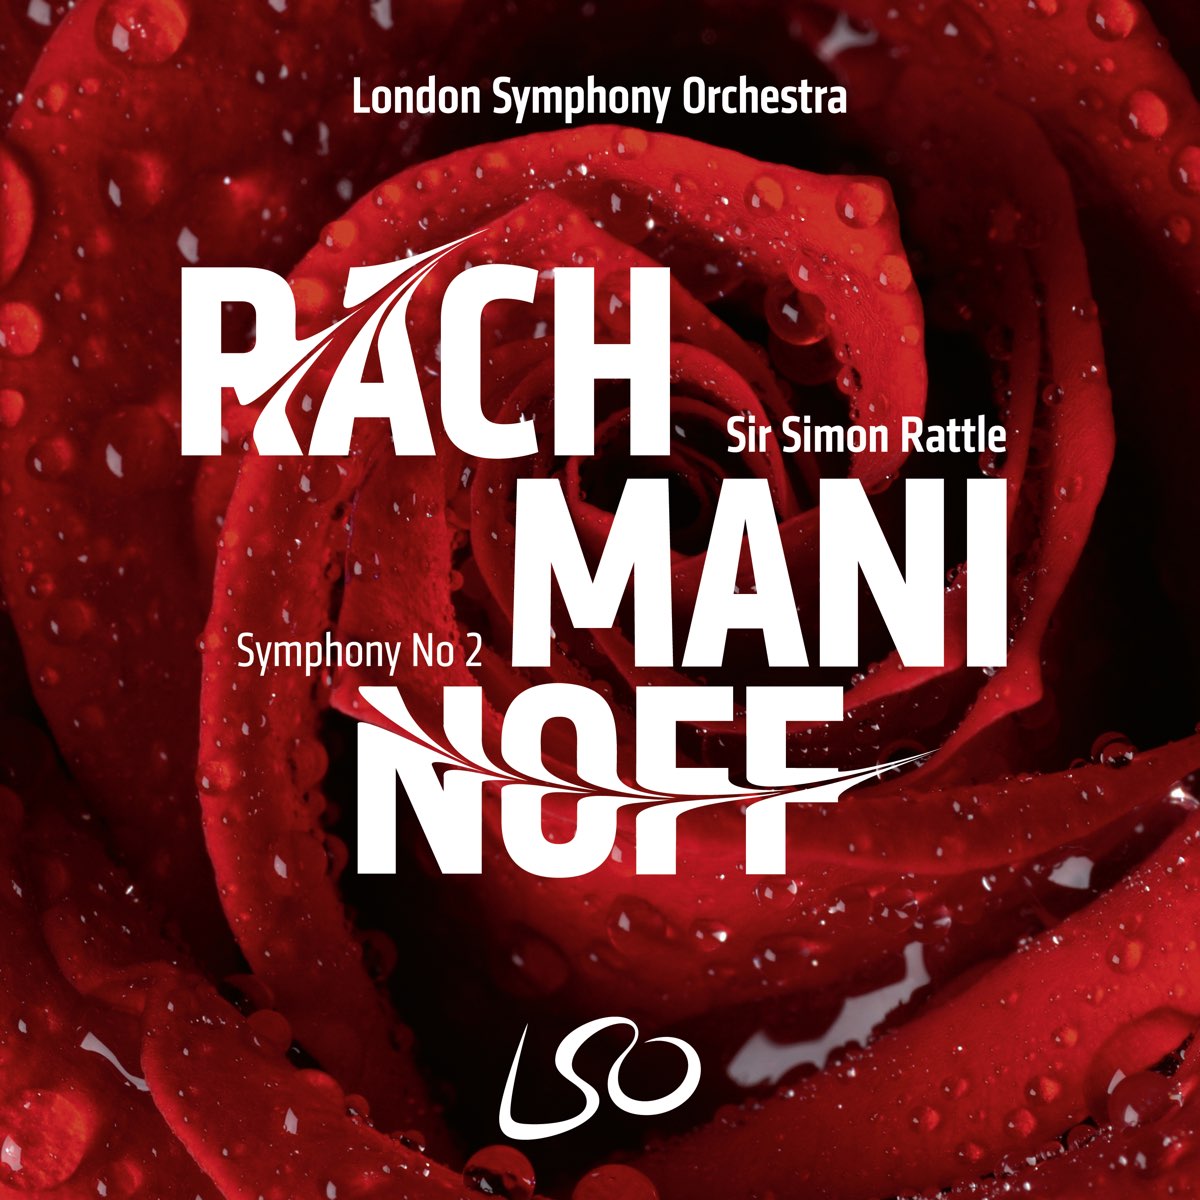 London Symphony Orchestra/Sir Simon Rattle – Rachmaninoff: Symphony No. 2